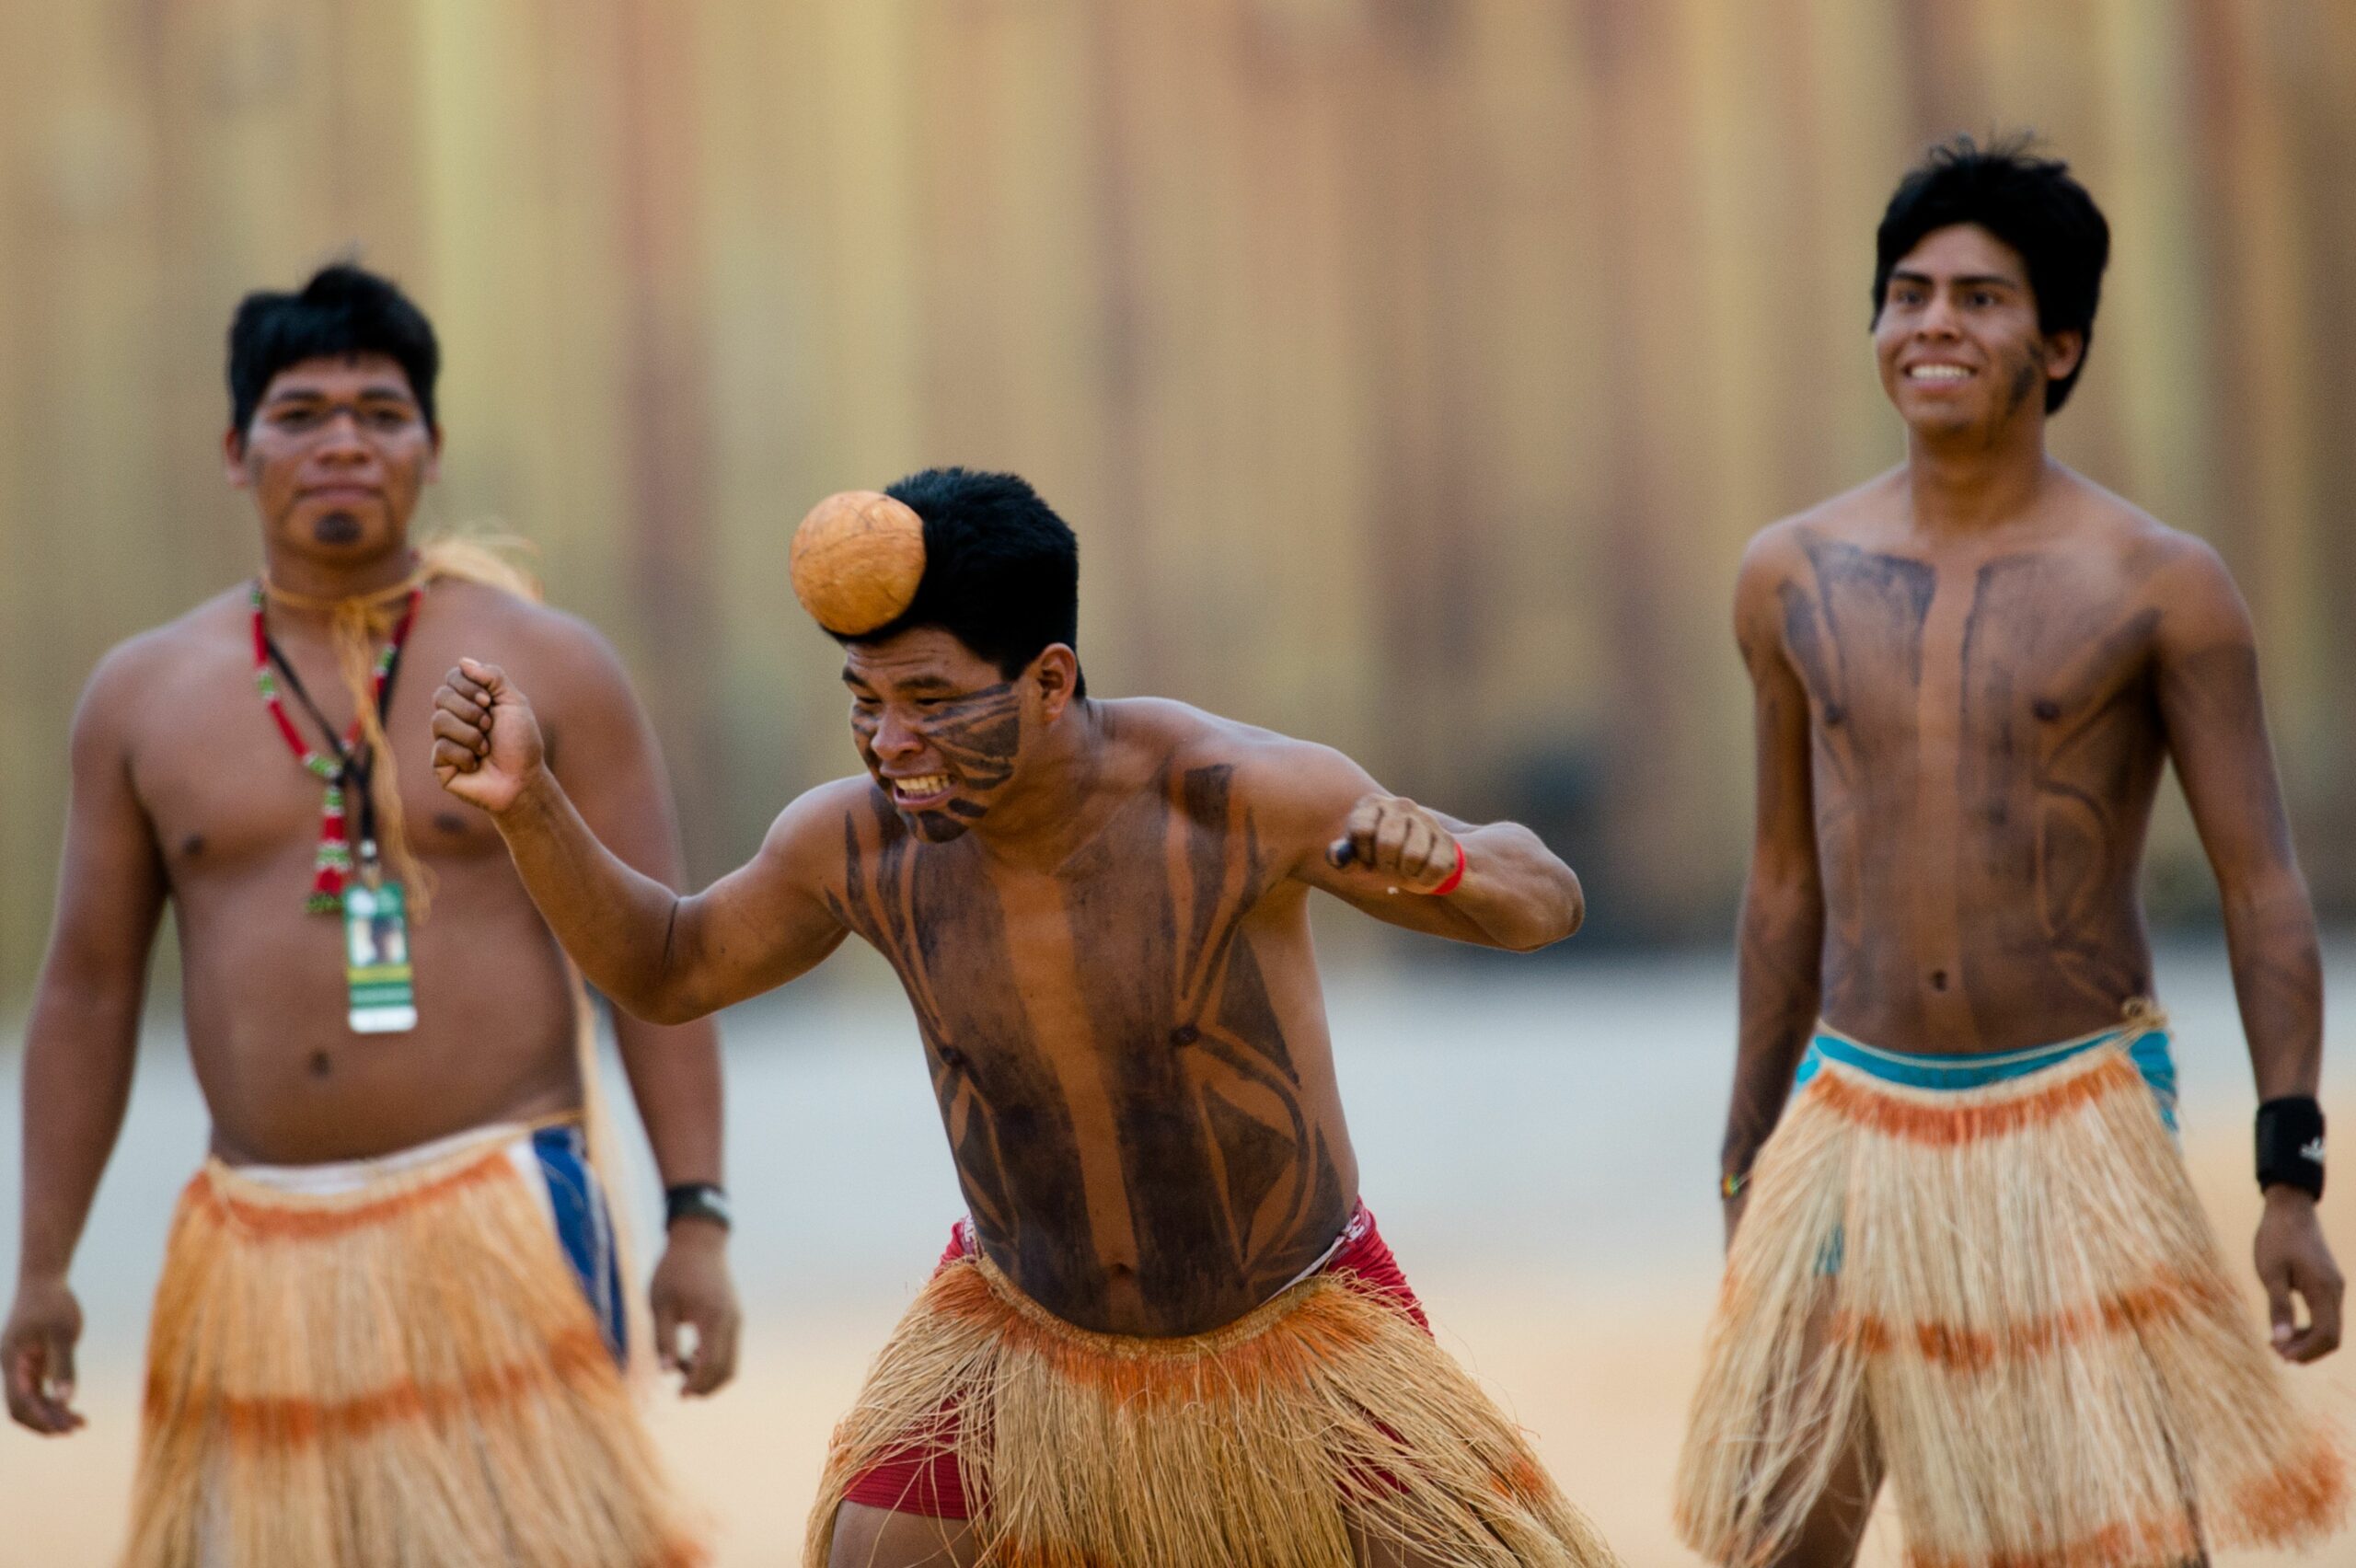 Jogos dos Povos Indígenas Brasil 2013 / Brazil Indigenous …